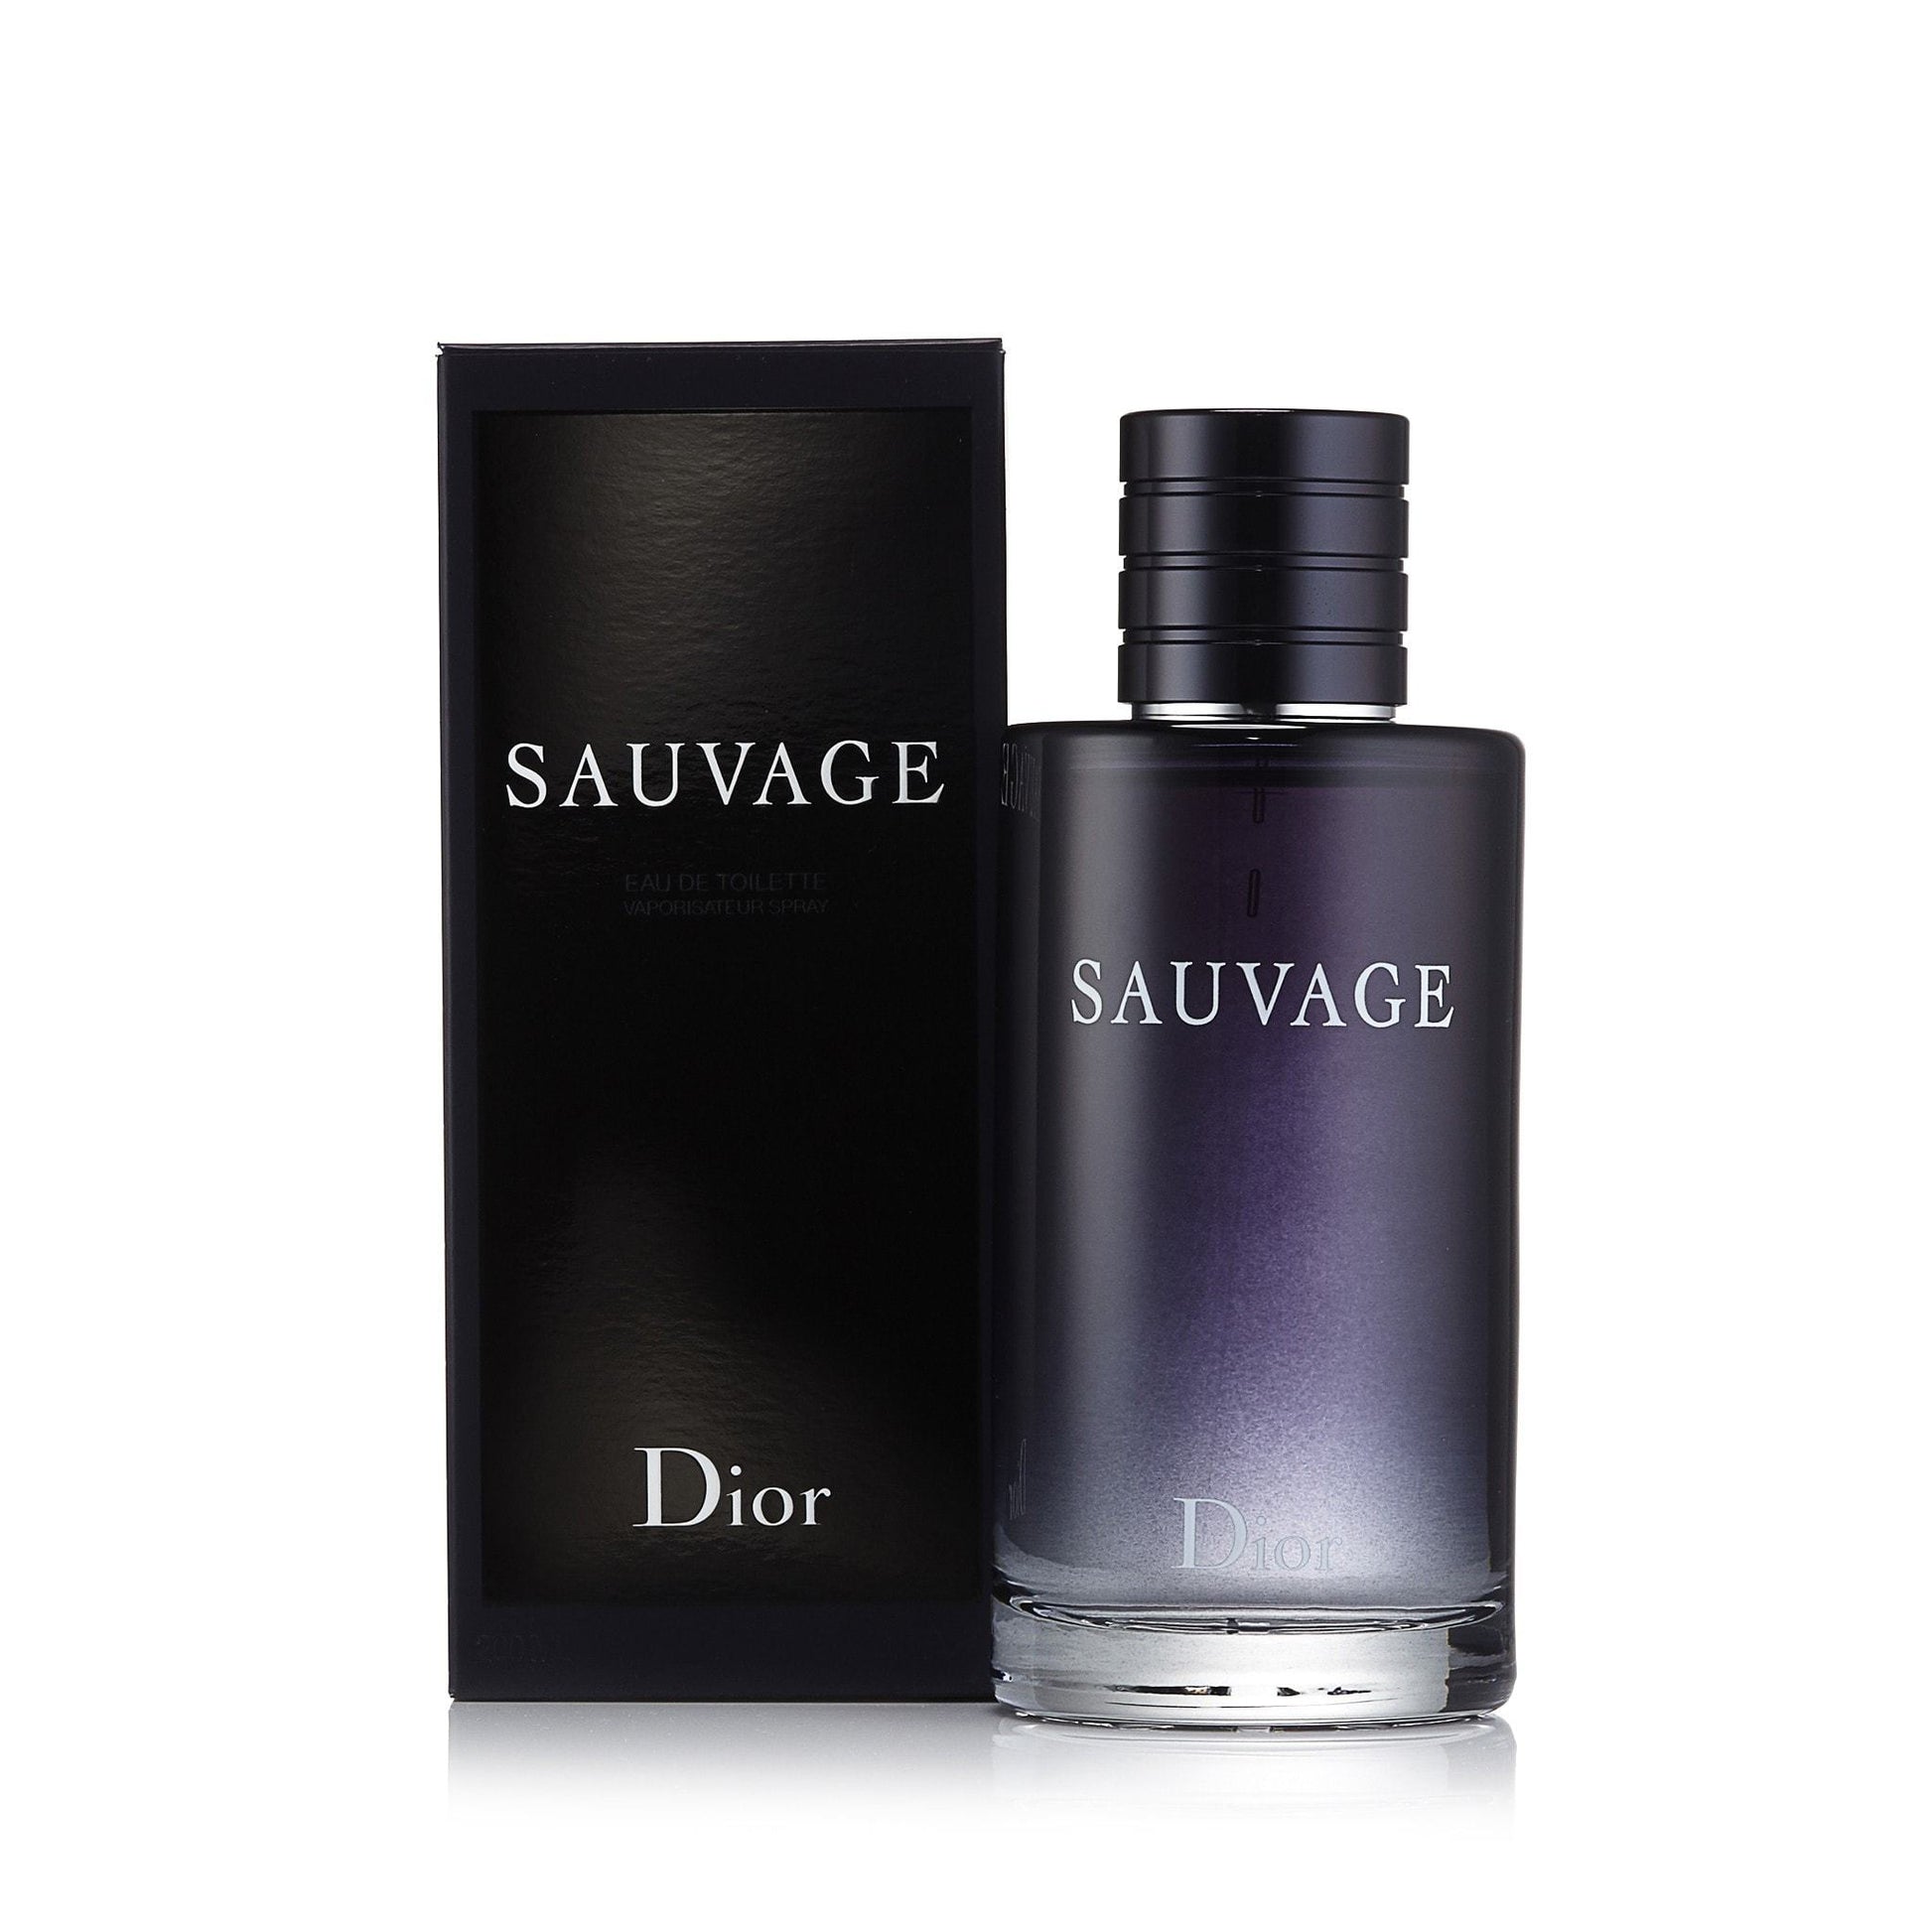 Sauvage Eau de Toilette Spray for Men by Dior, Product image 1